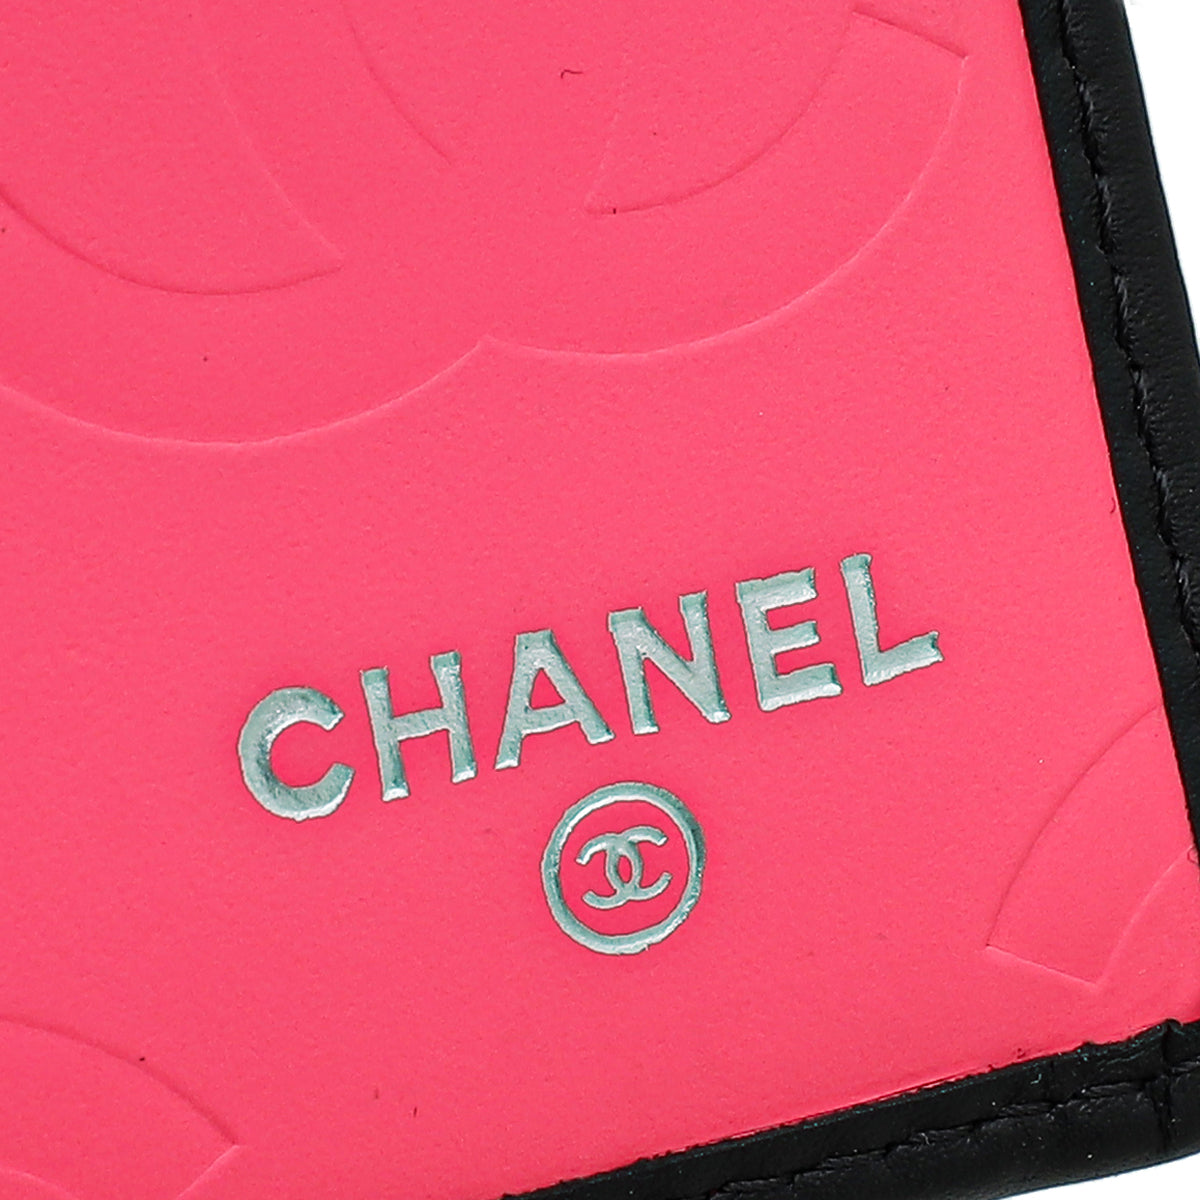 Chanel Black CC Cambon Organizer Large Wallet